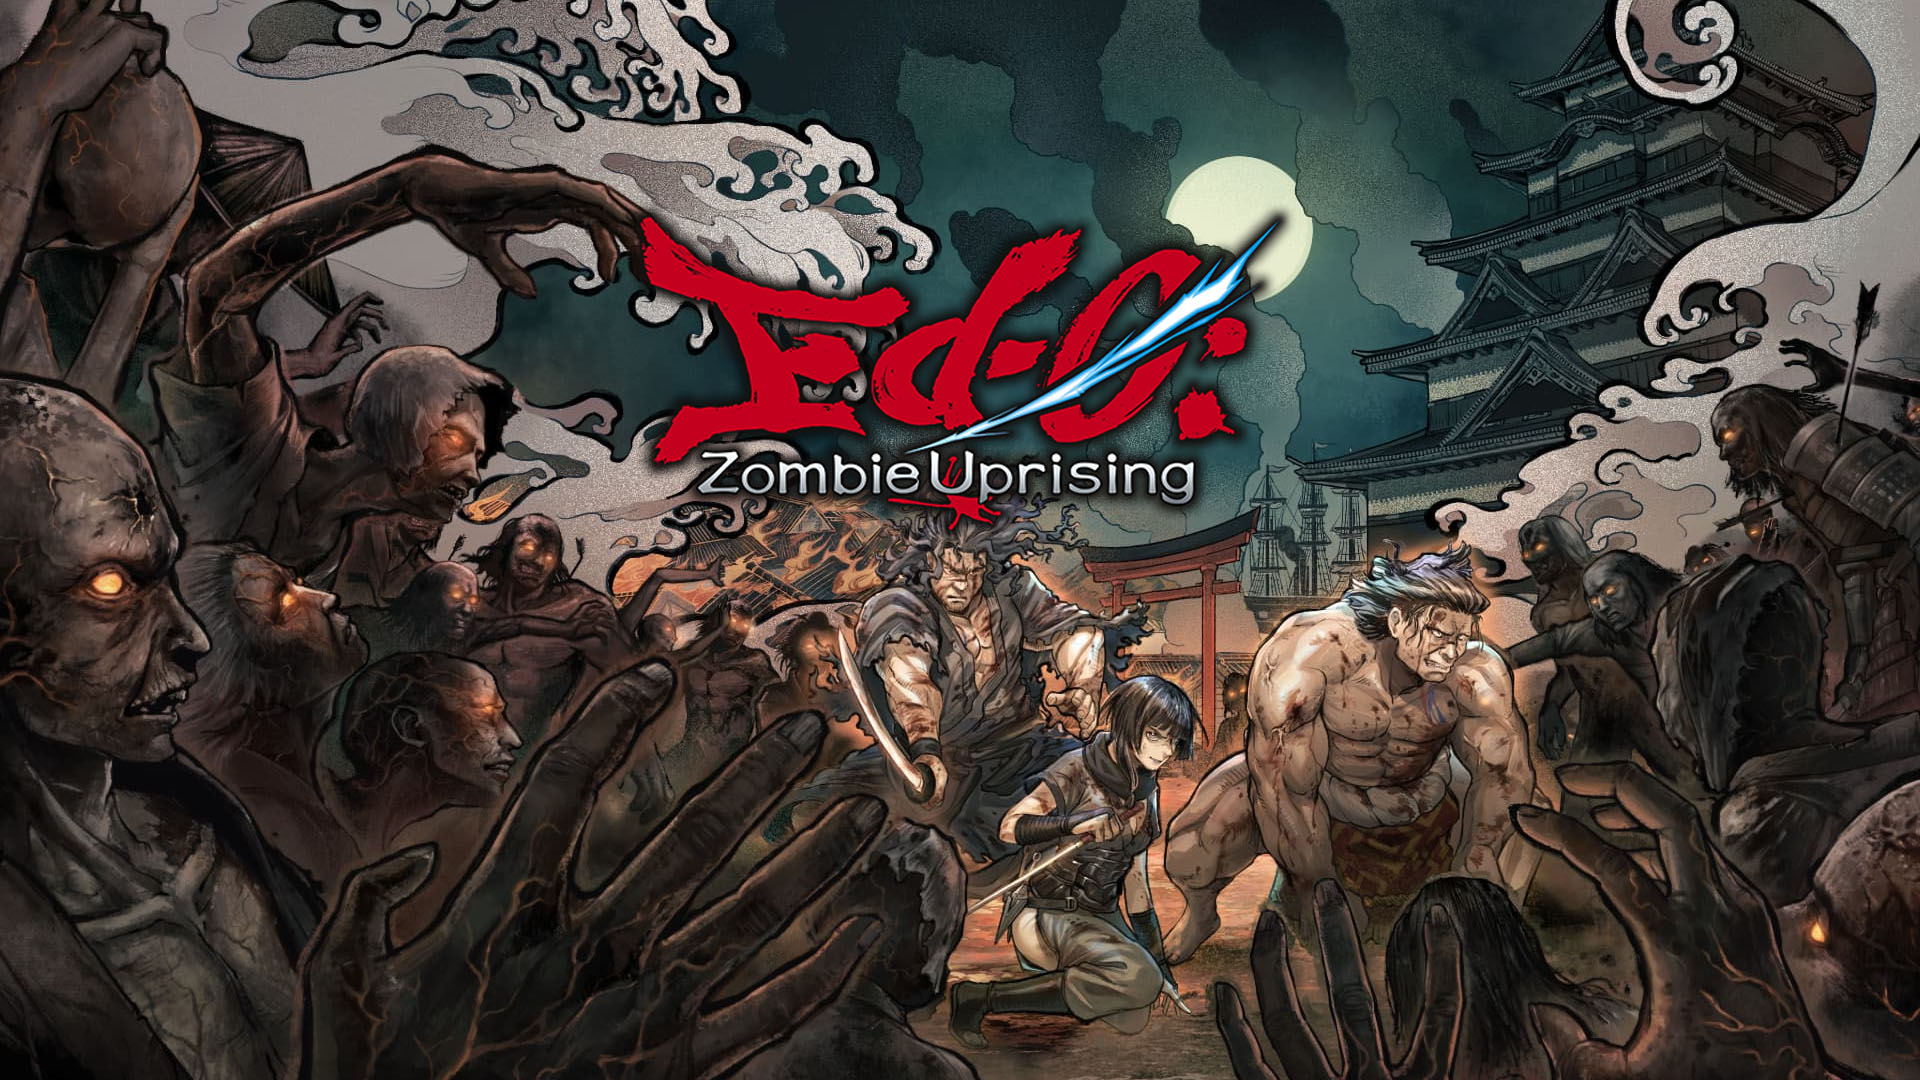 Ed-0: Zombie Uprising